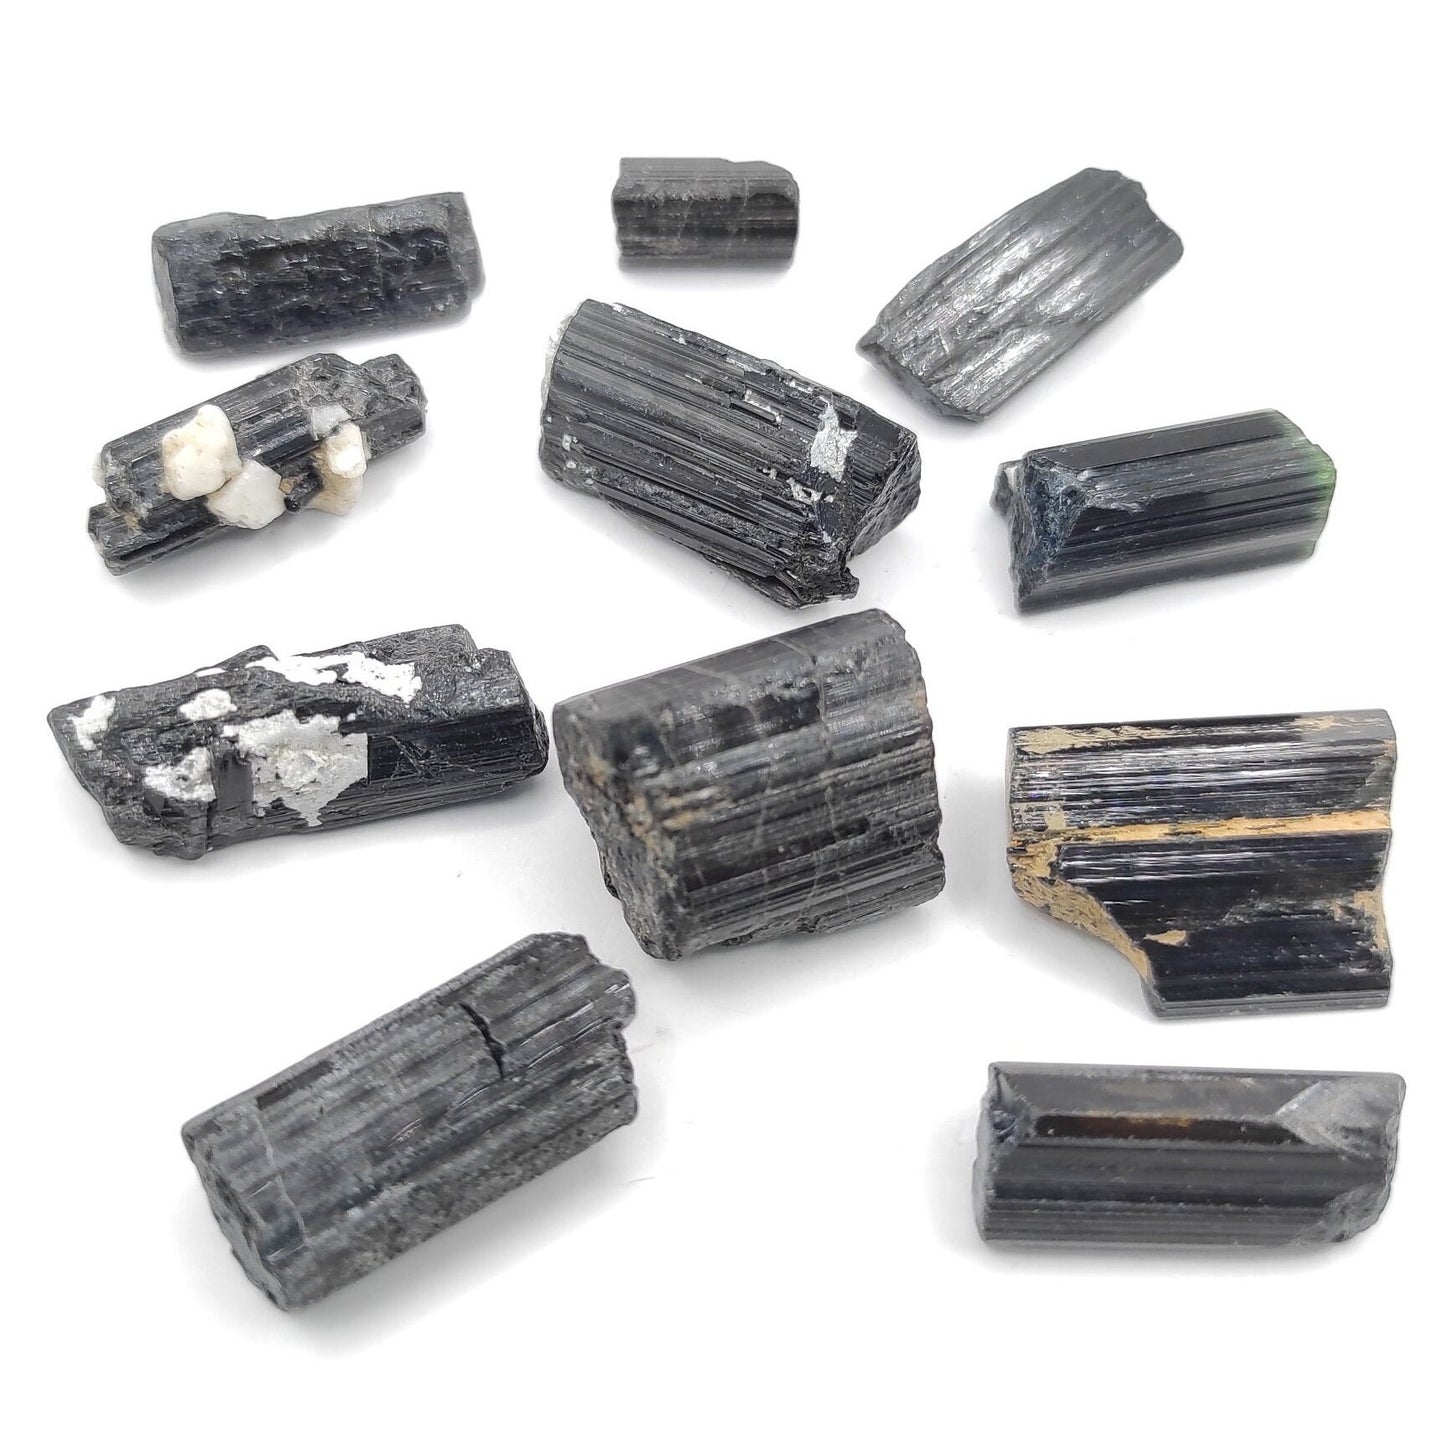 44g Lot of Black Tourmaline - Raw Black Tourmaline from Skardu, Pakistan - Natural Tourmaline Stones - Raw Tourmaline - Rough Crystals